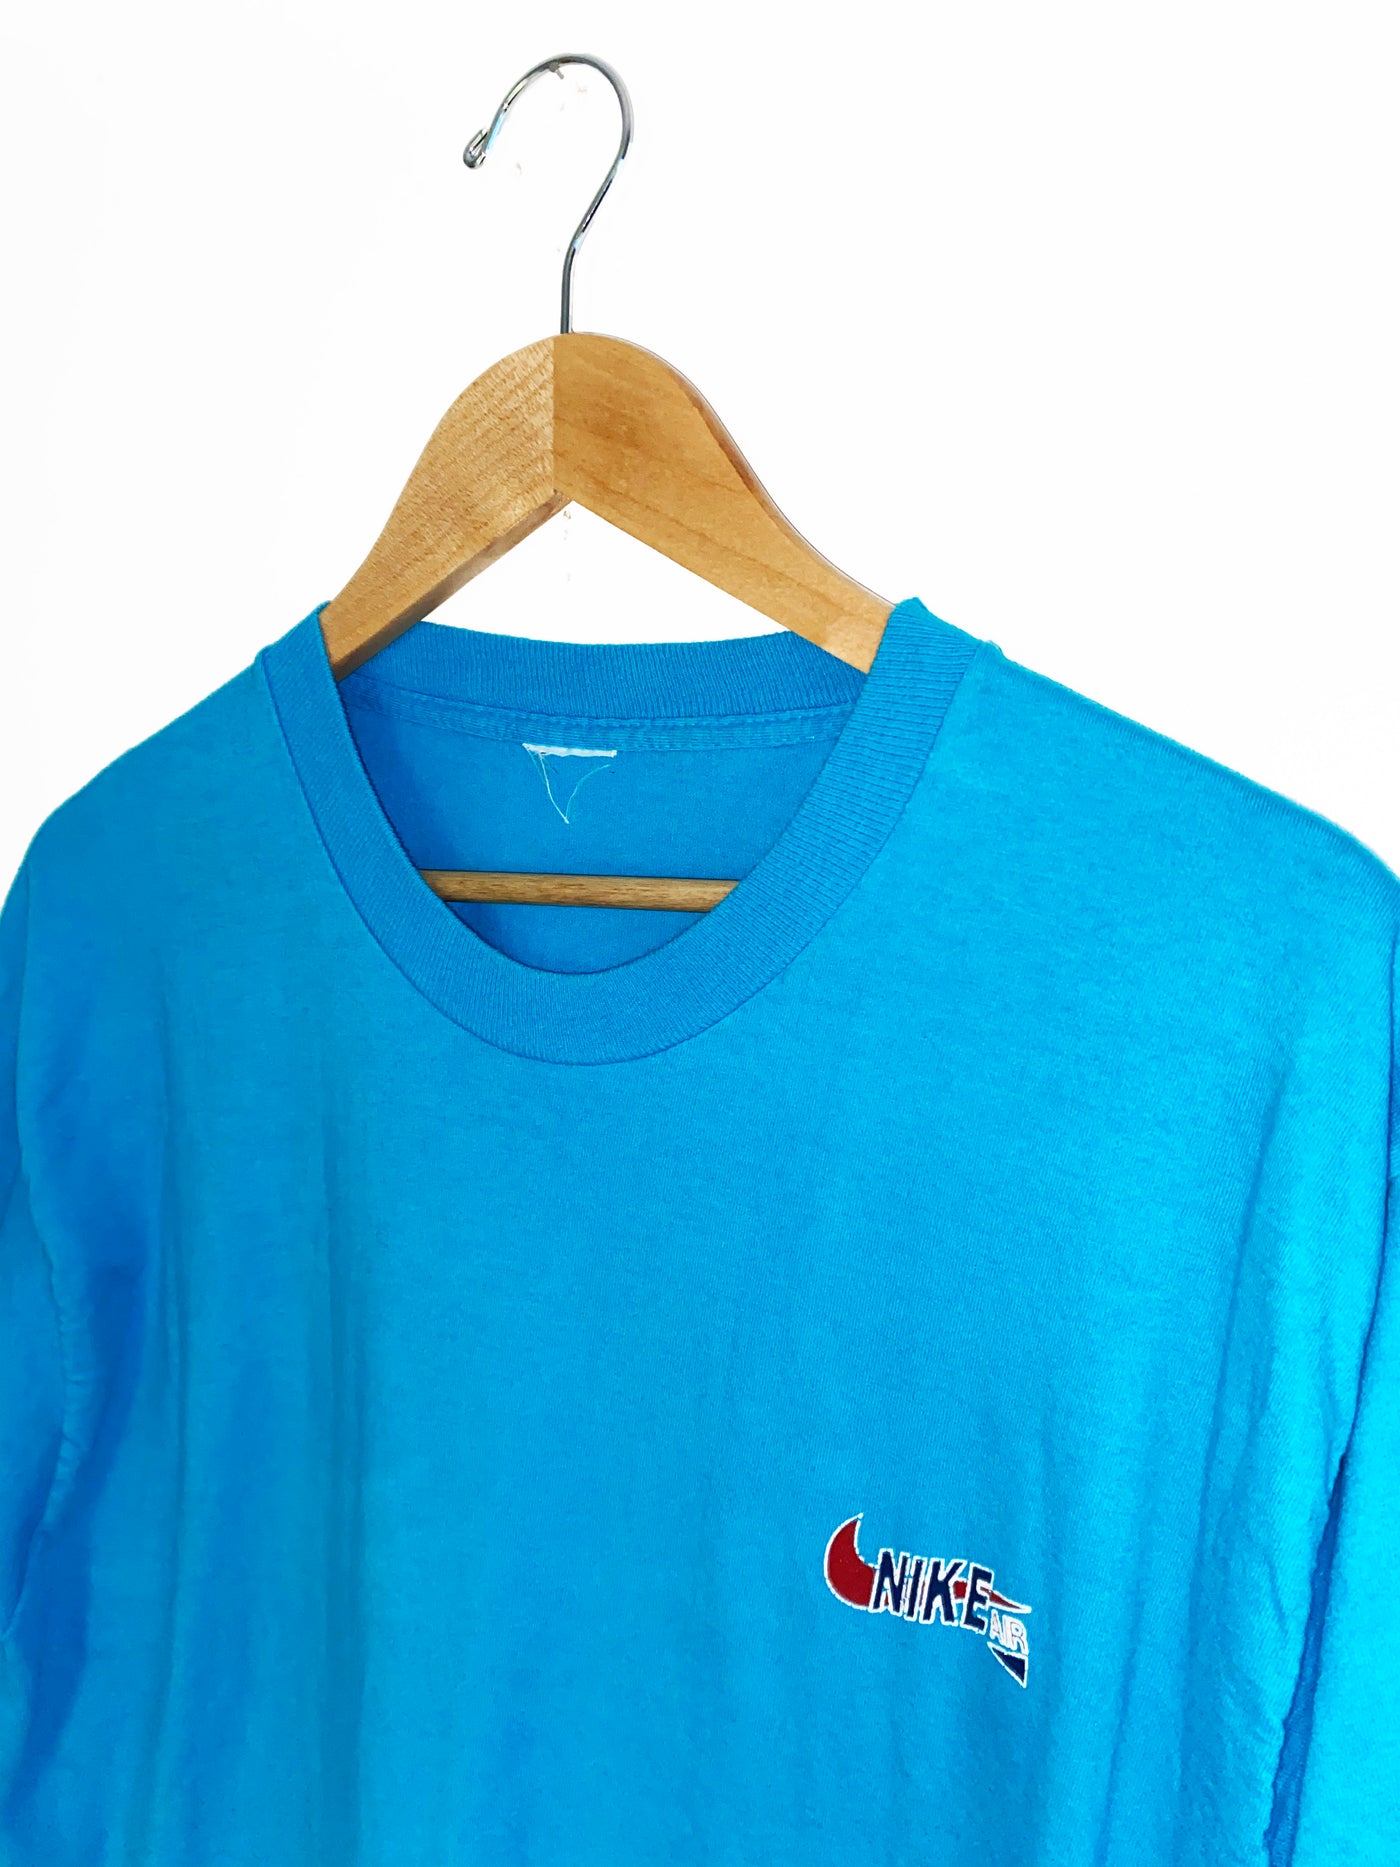 Vintage 90's Nike Air T-Shirt